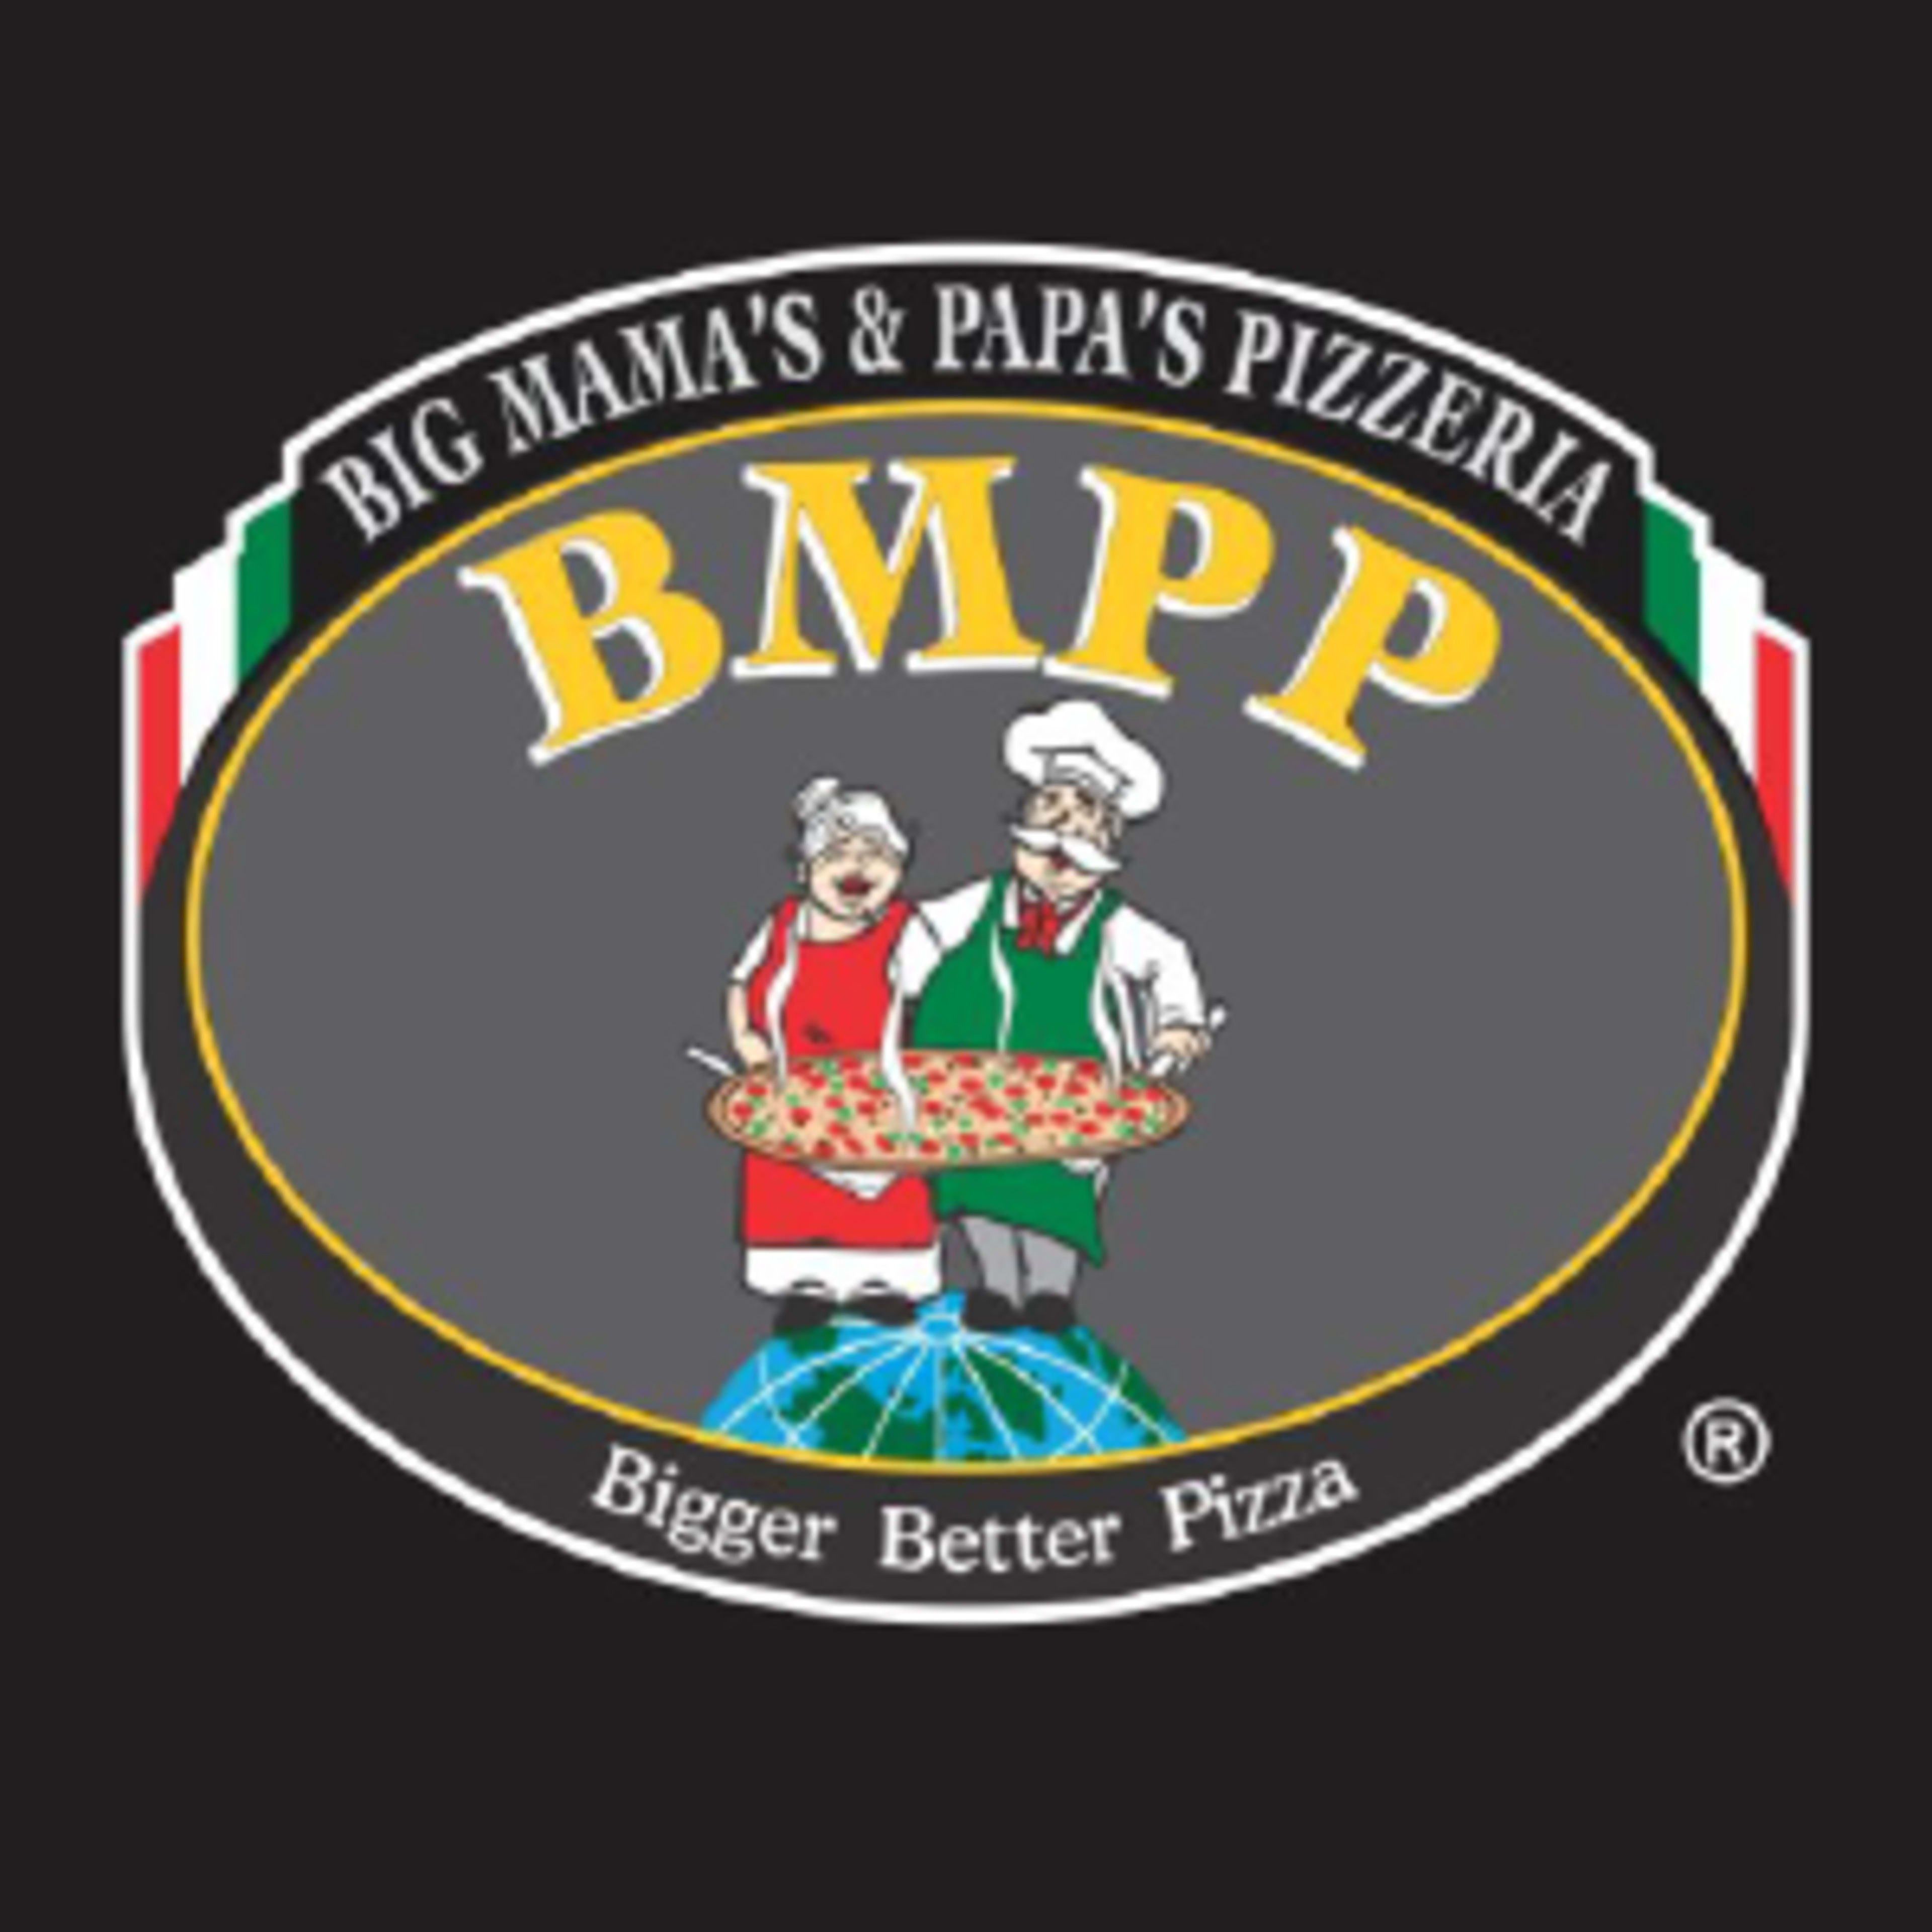 Big Mama’s & Papa’s PizzeriaCode